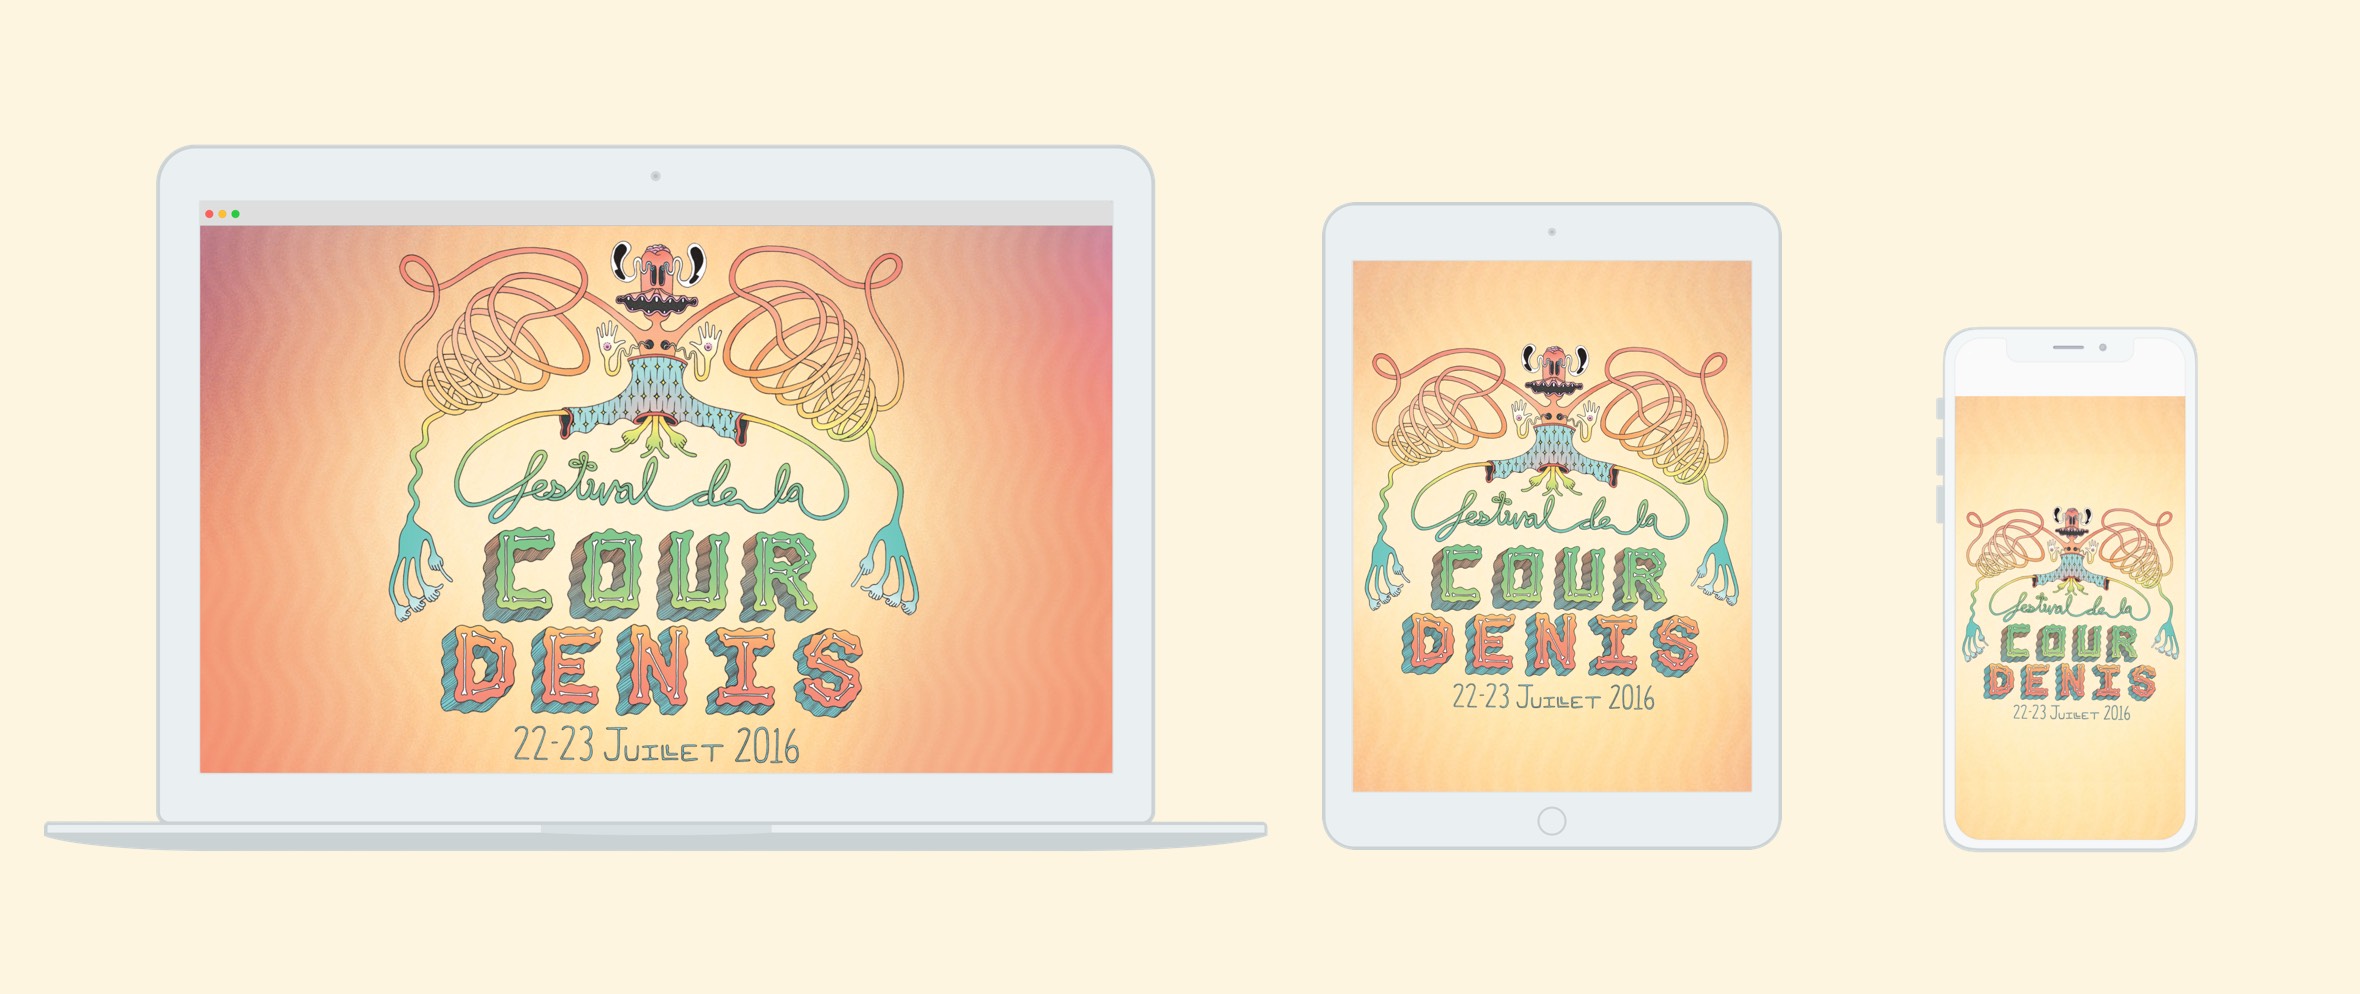 Laptop, tablet and smartphone displaying 2016 Festival de la Cour Denis website with illustration